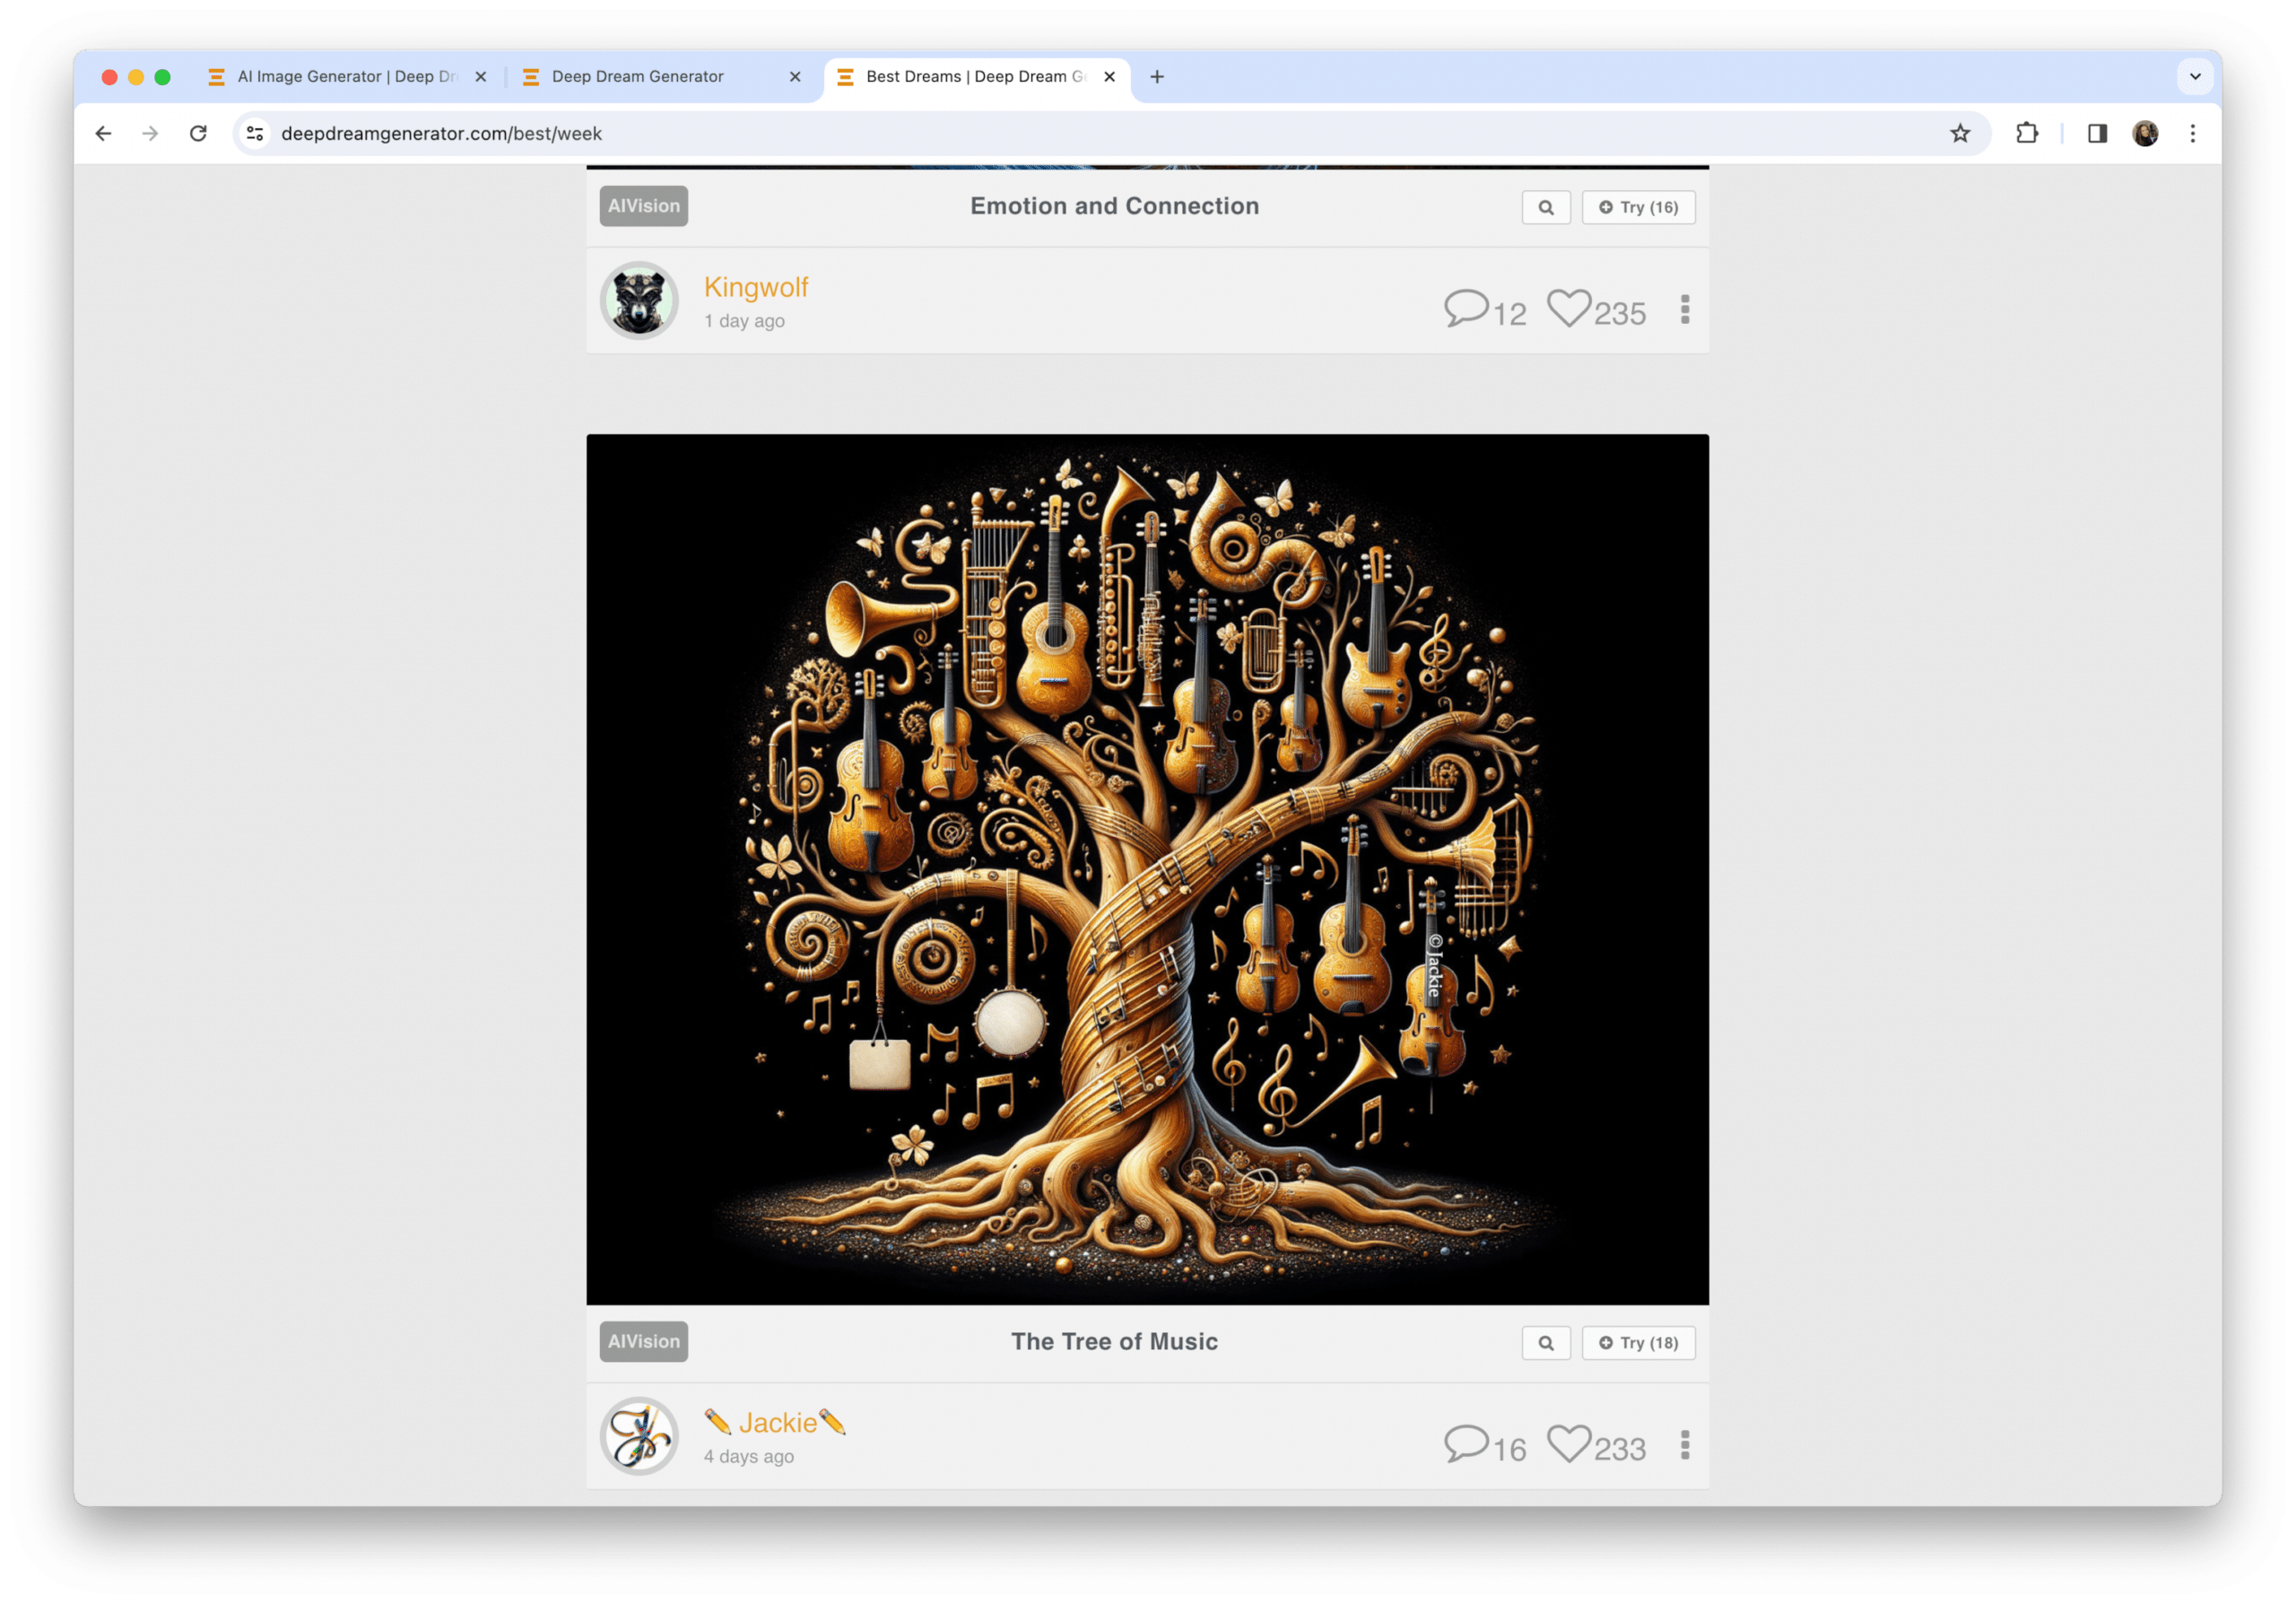  Deep Dream Generator music tree image